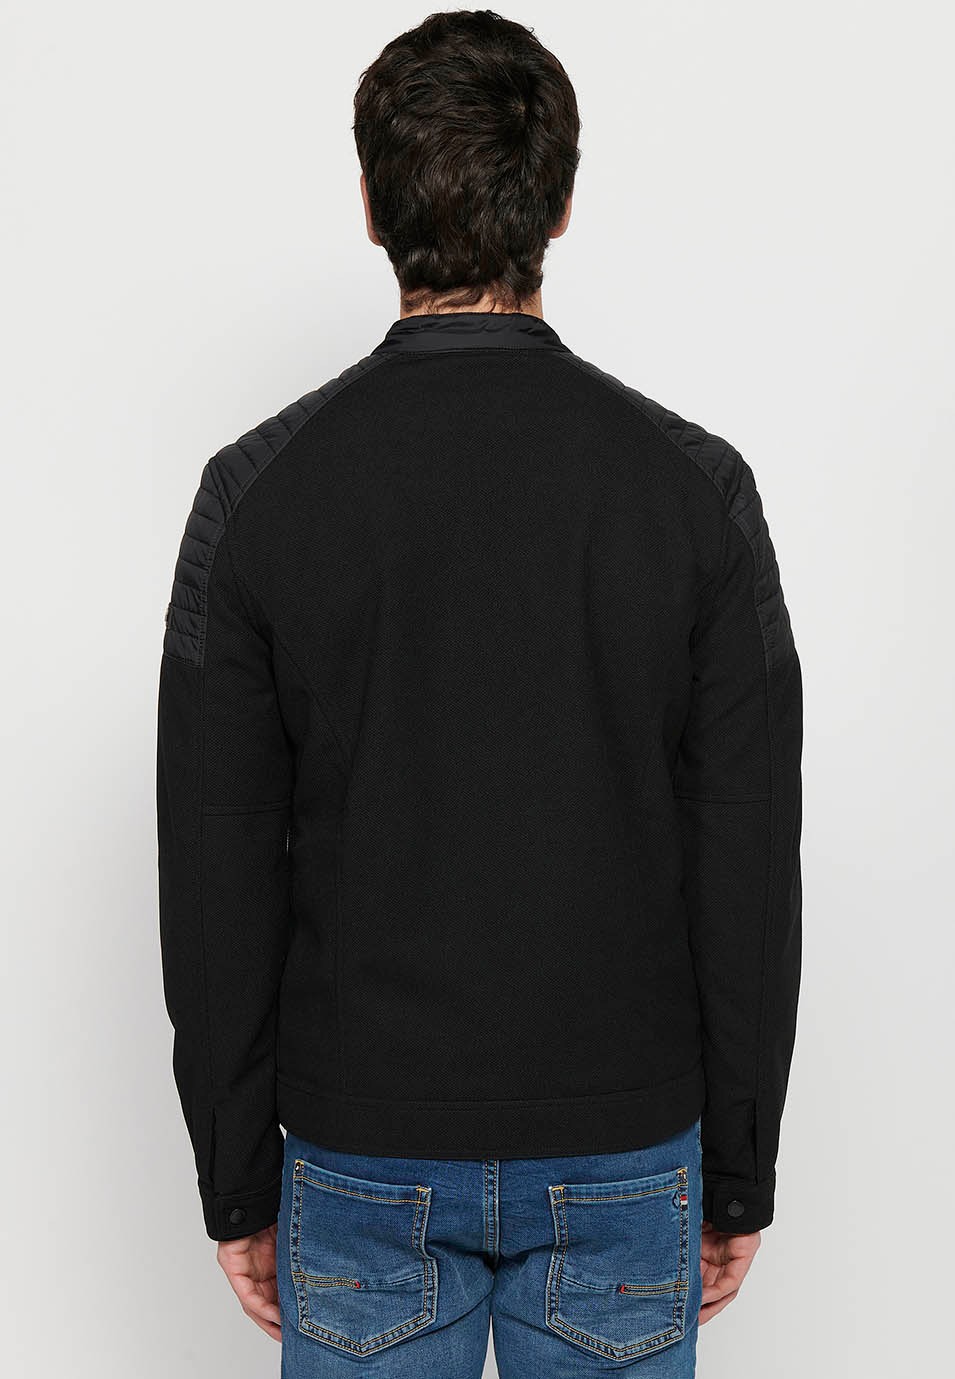 Black Cotton Round Neck Jacket with Front Zipper Closure for Men